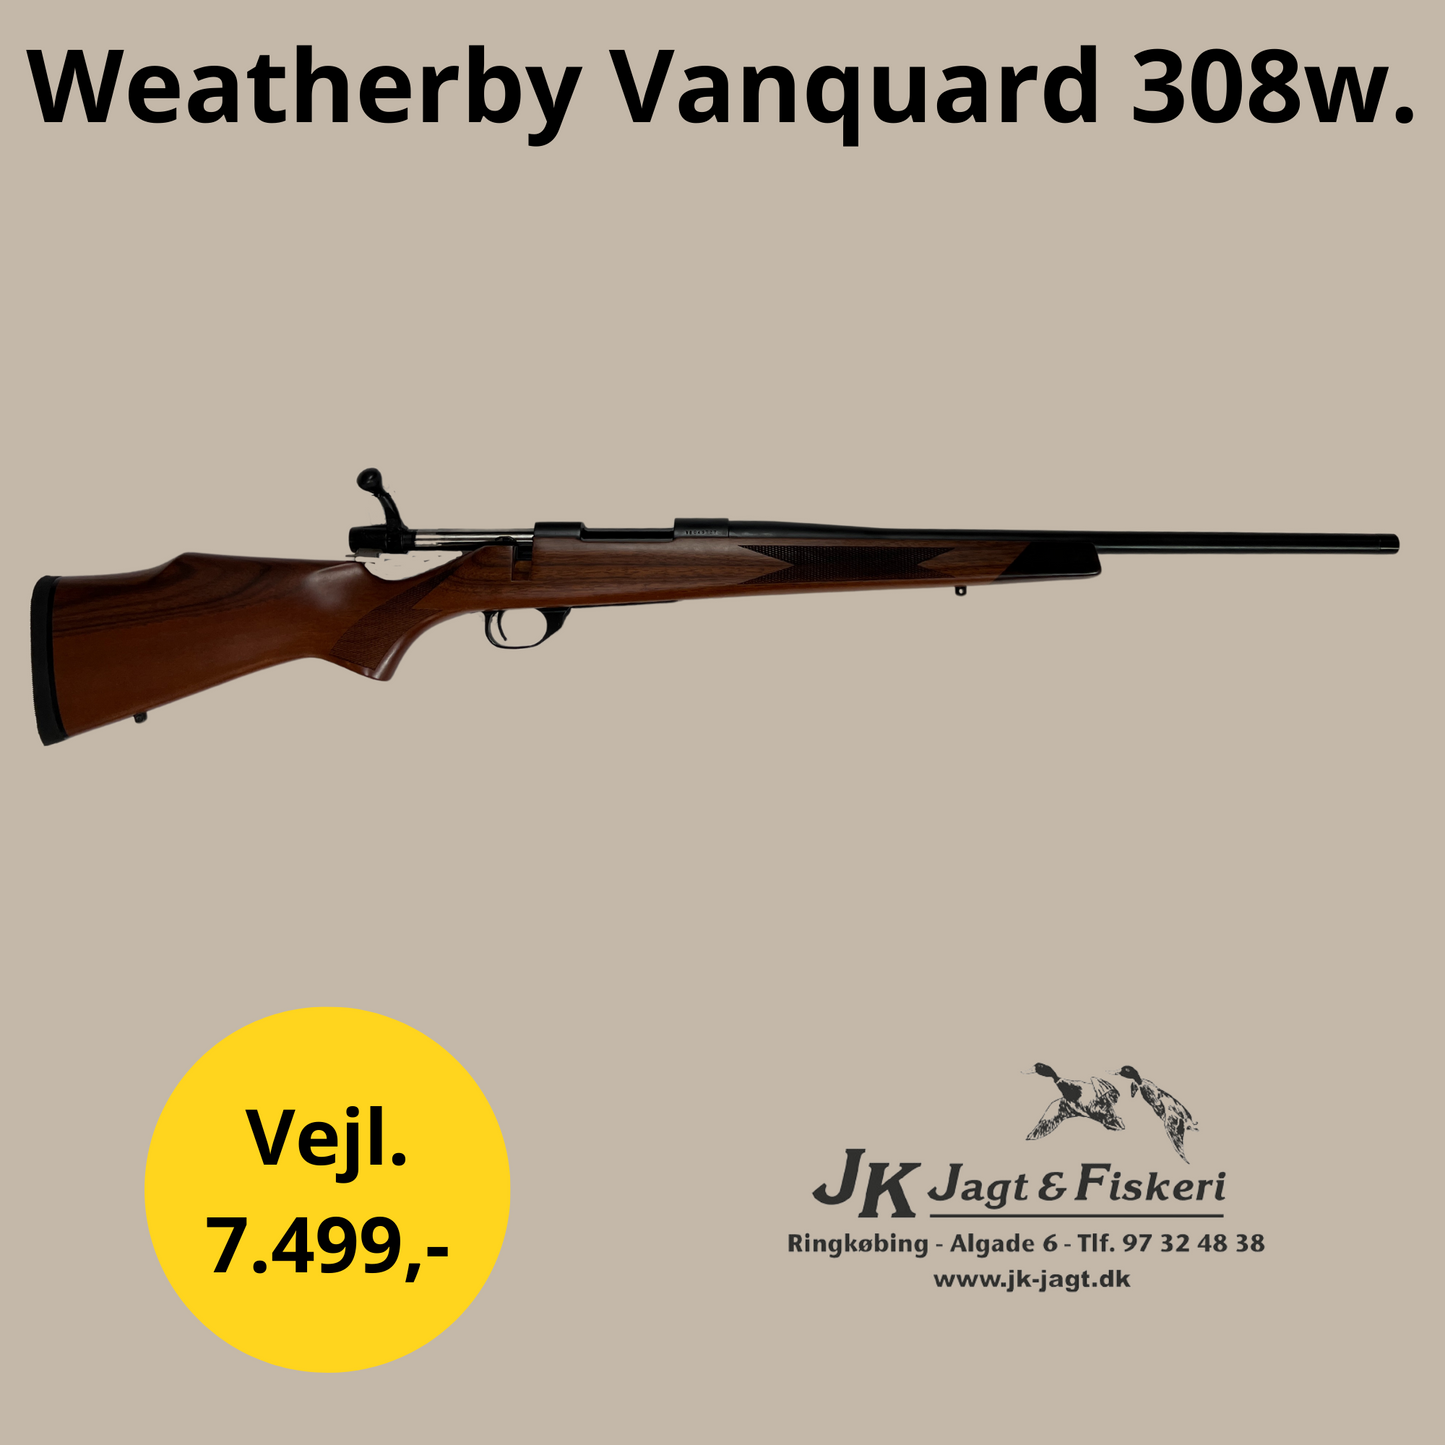 Weatherby Vanquard 308w.